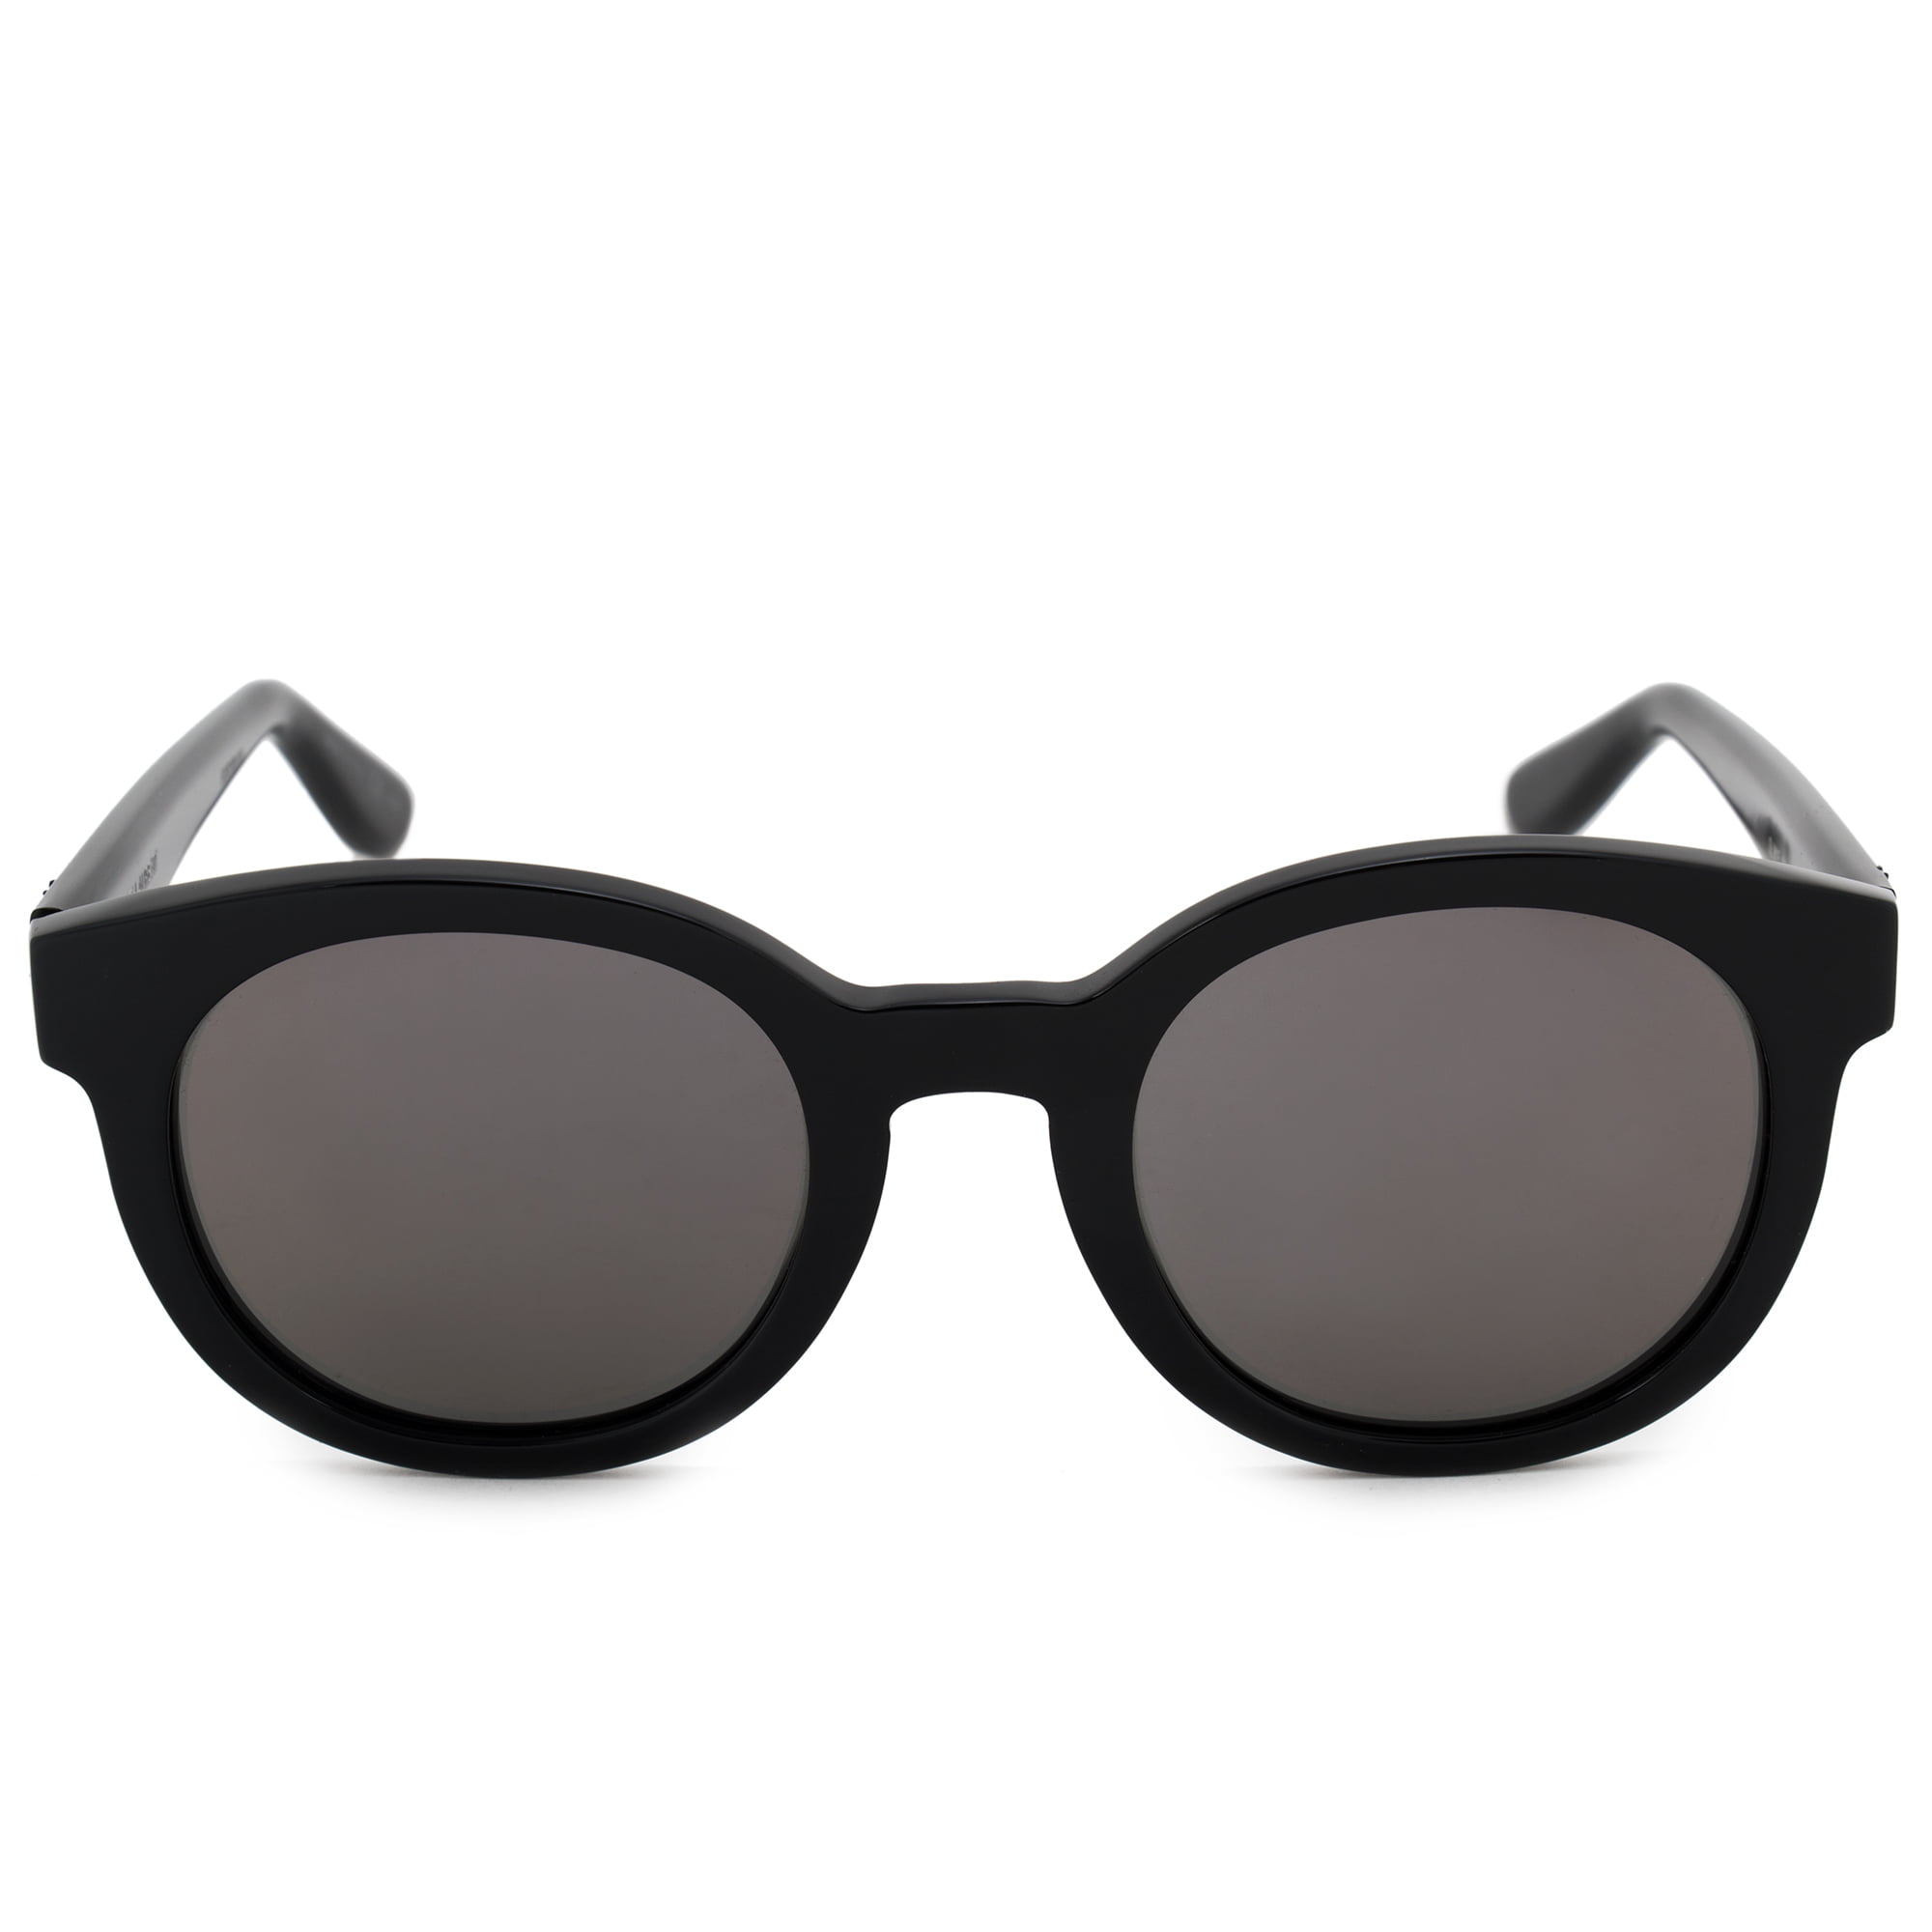 Saint Laurent SL M15-001 5 Black Round Sunglasses - Walmart.com